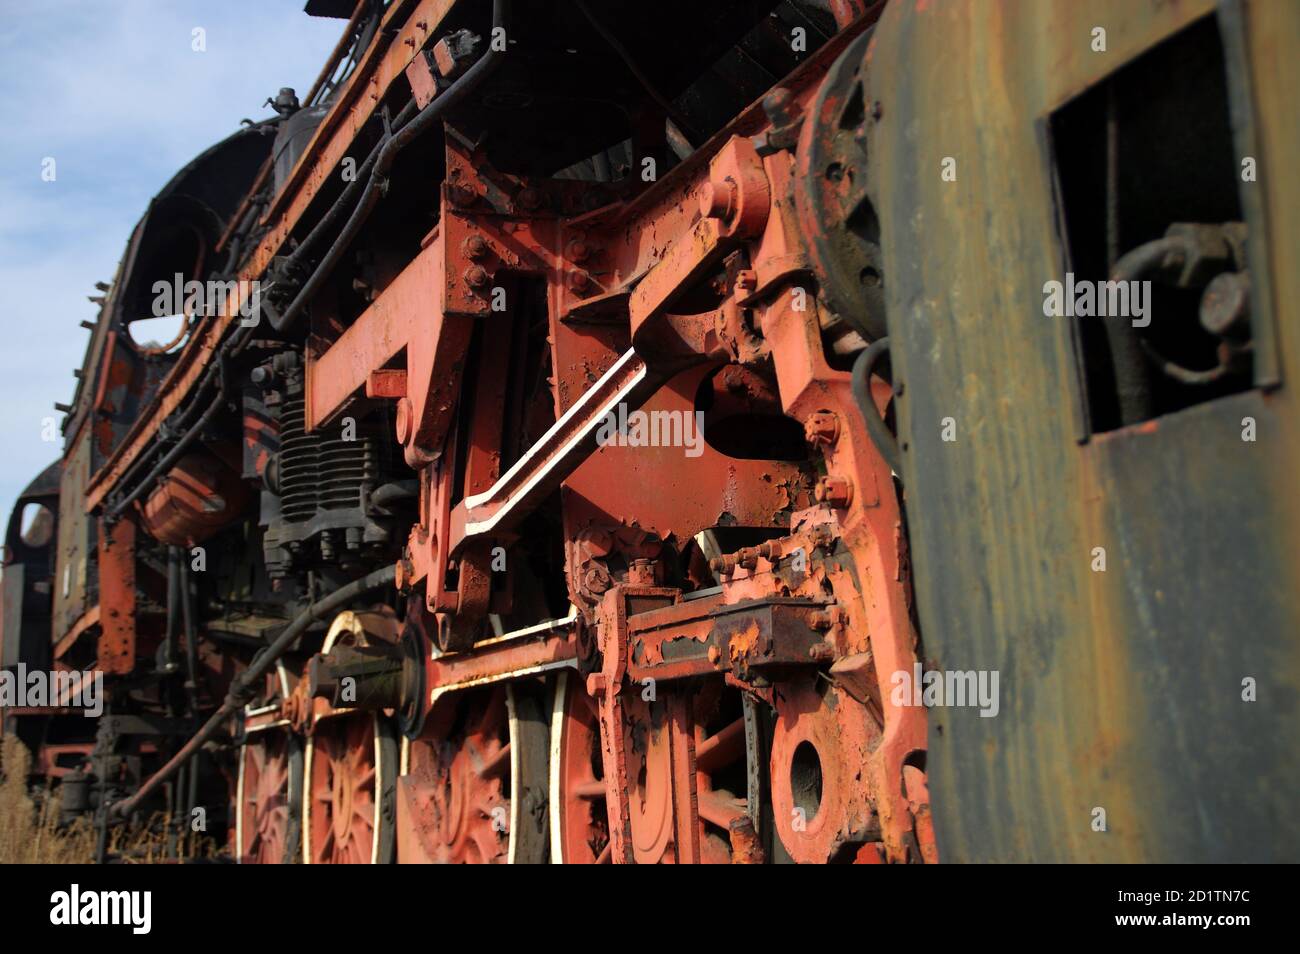 Steam locomotive. Old rusty railway machine. Retro coal industry. Stock Photo